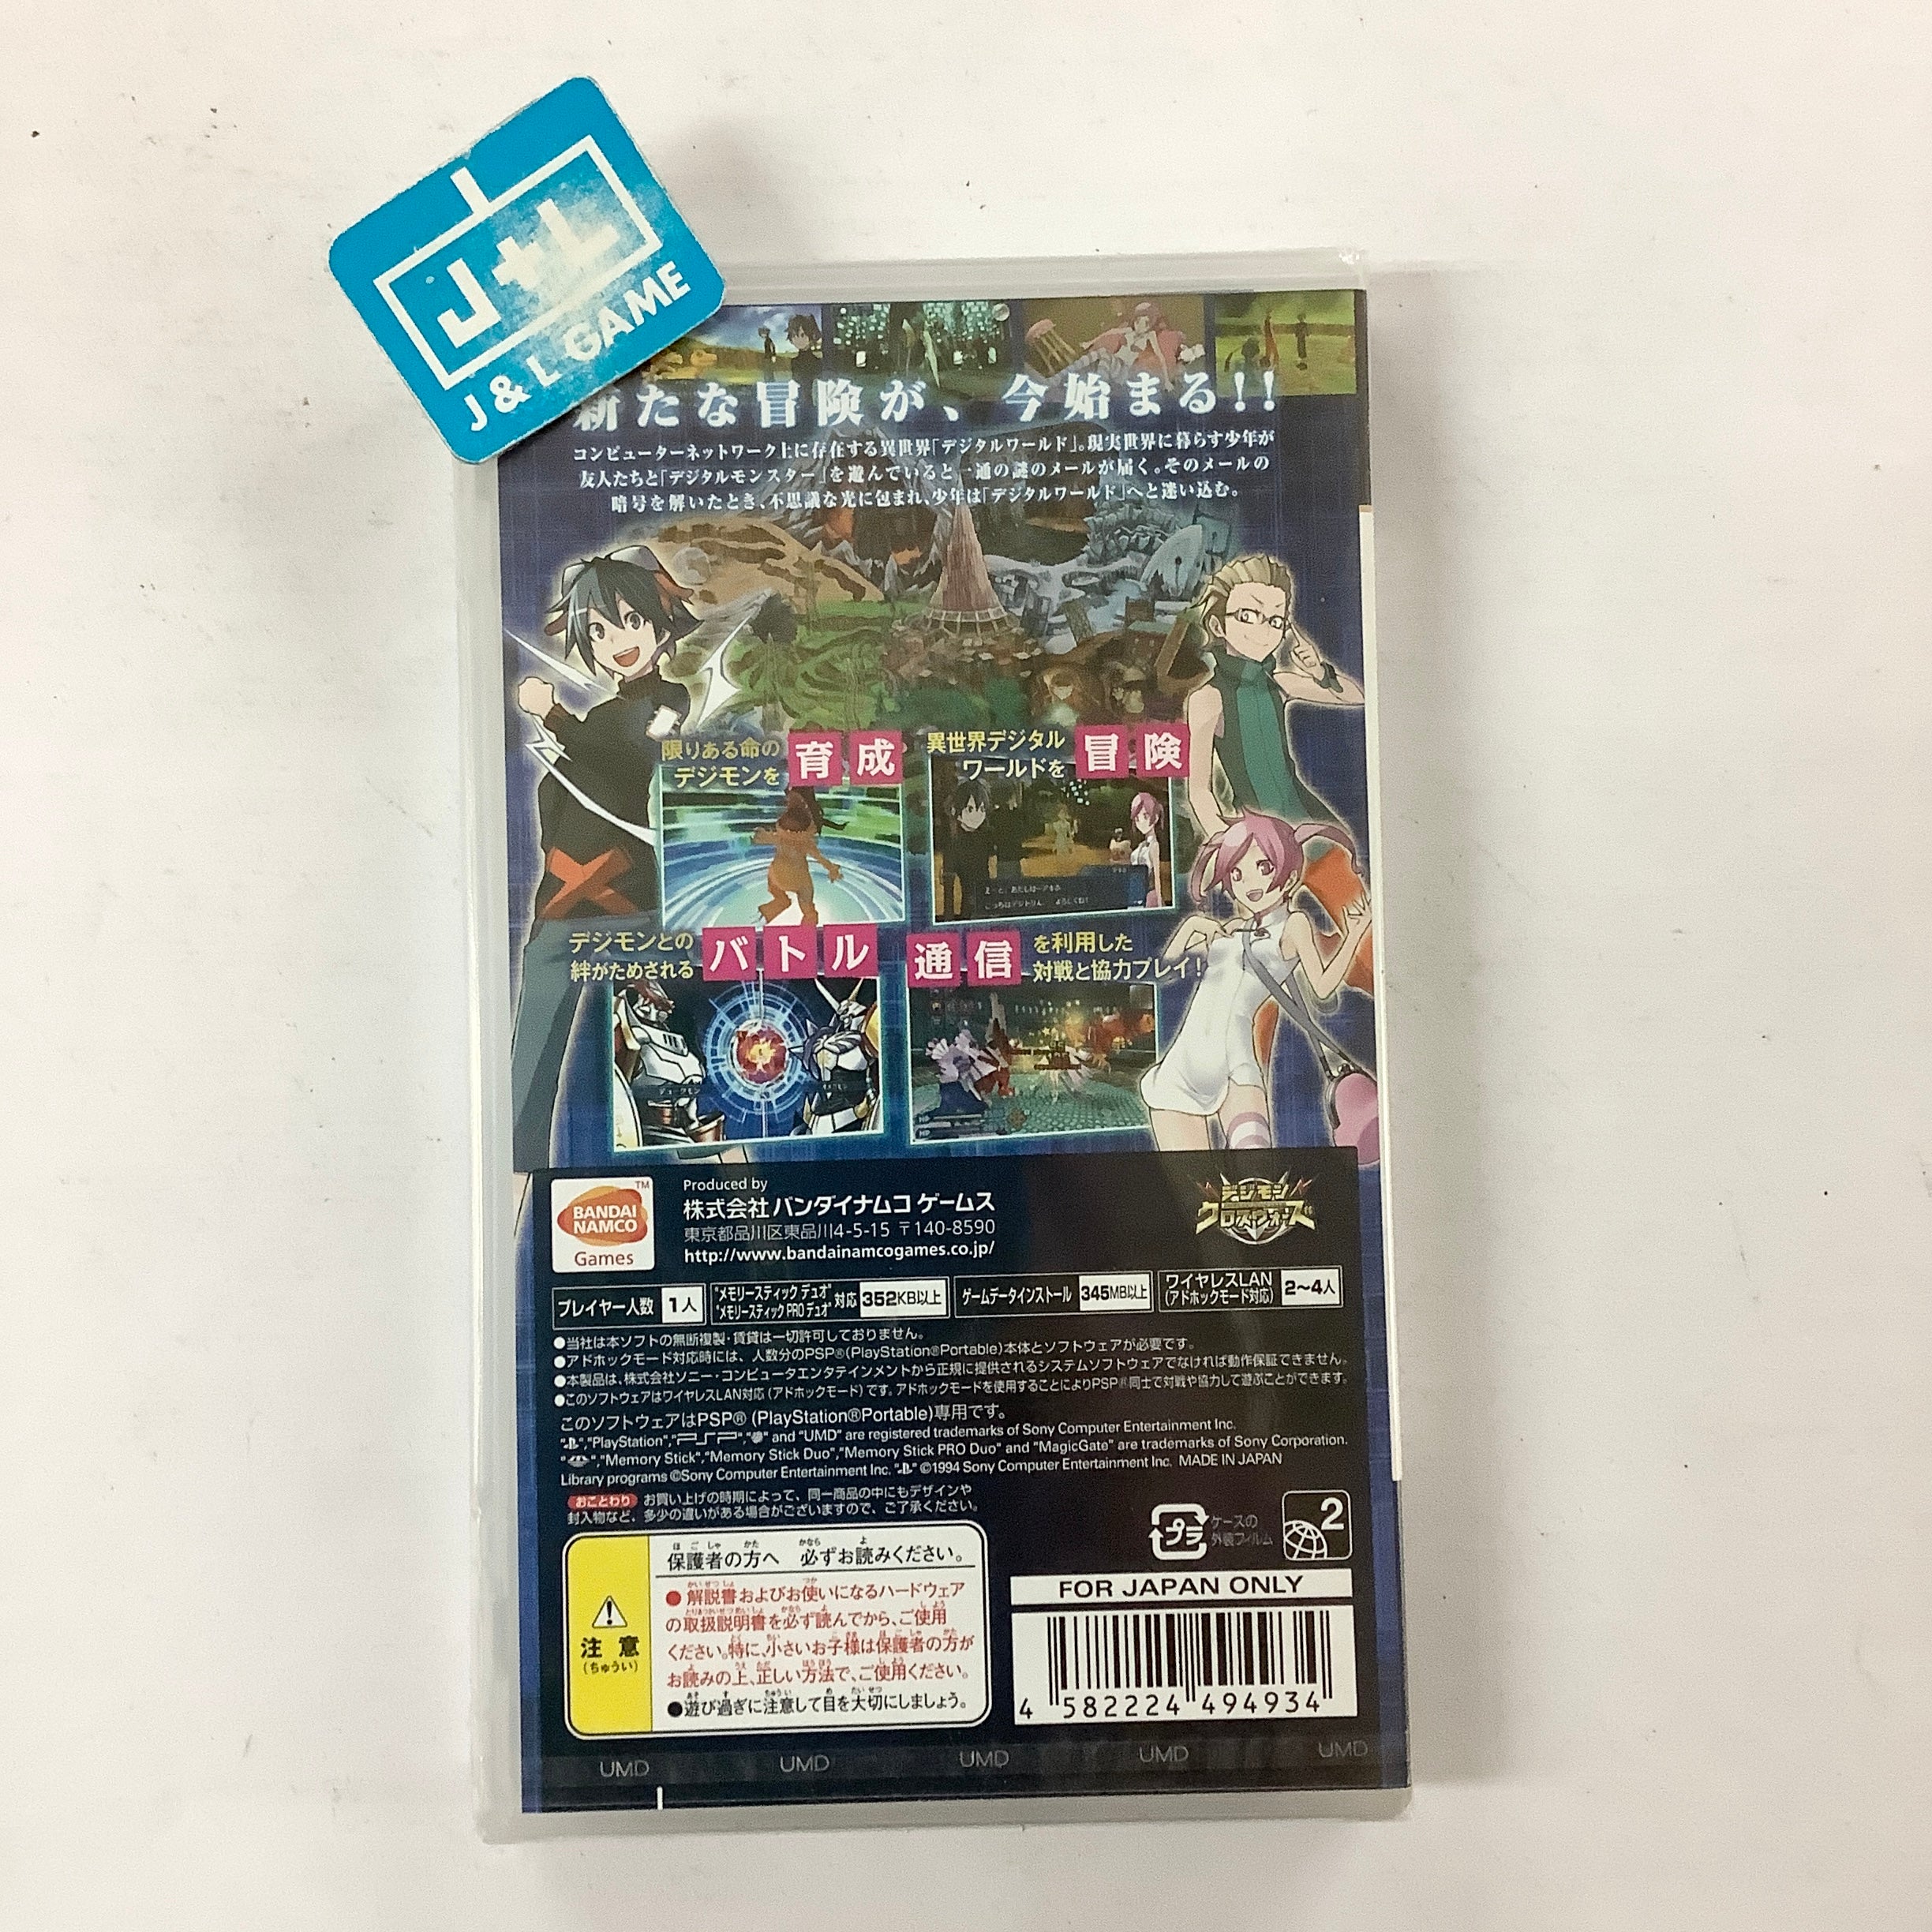 Digimon World Re:Digitize - Sony PSP (Japanese Import) Video Games Bandai Namco Games   